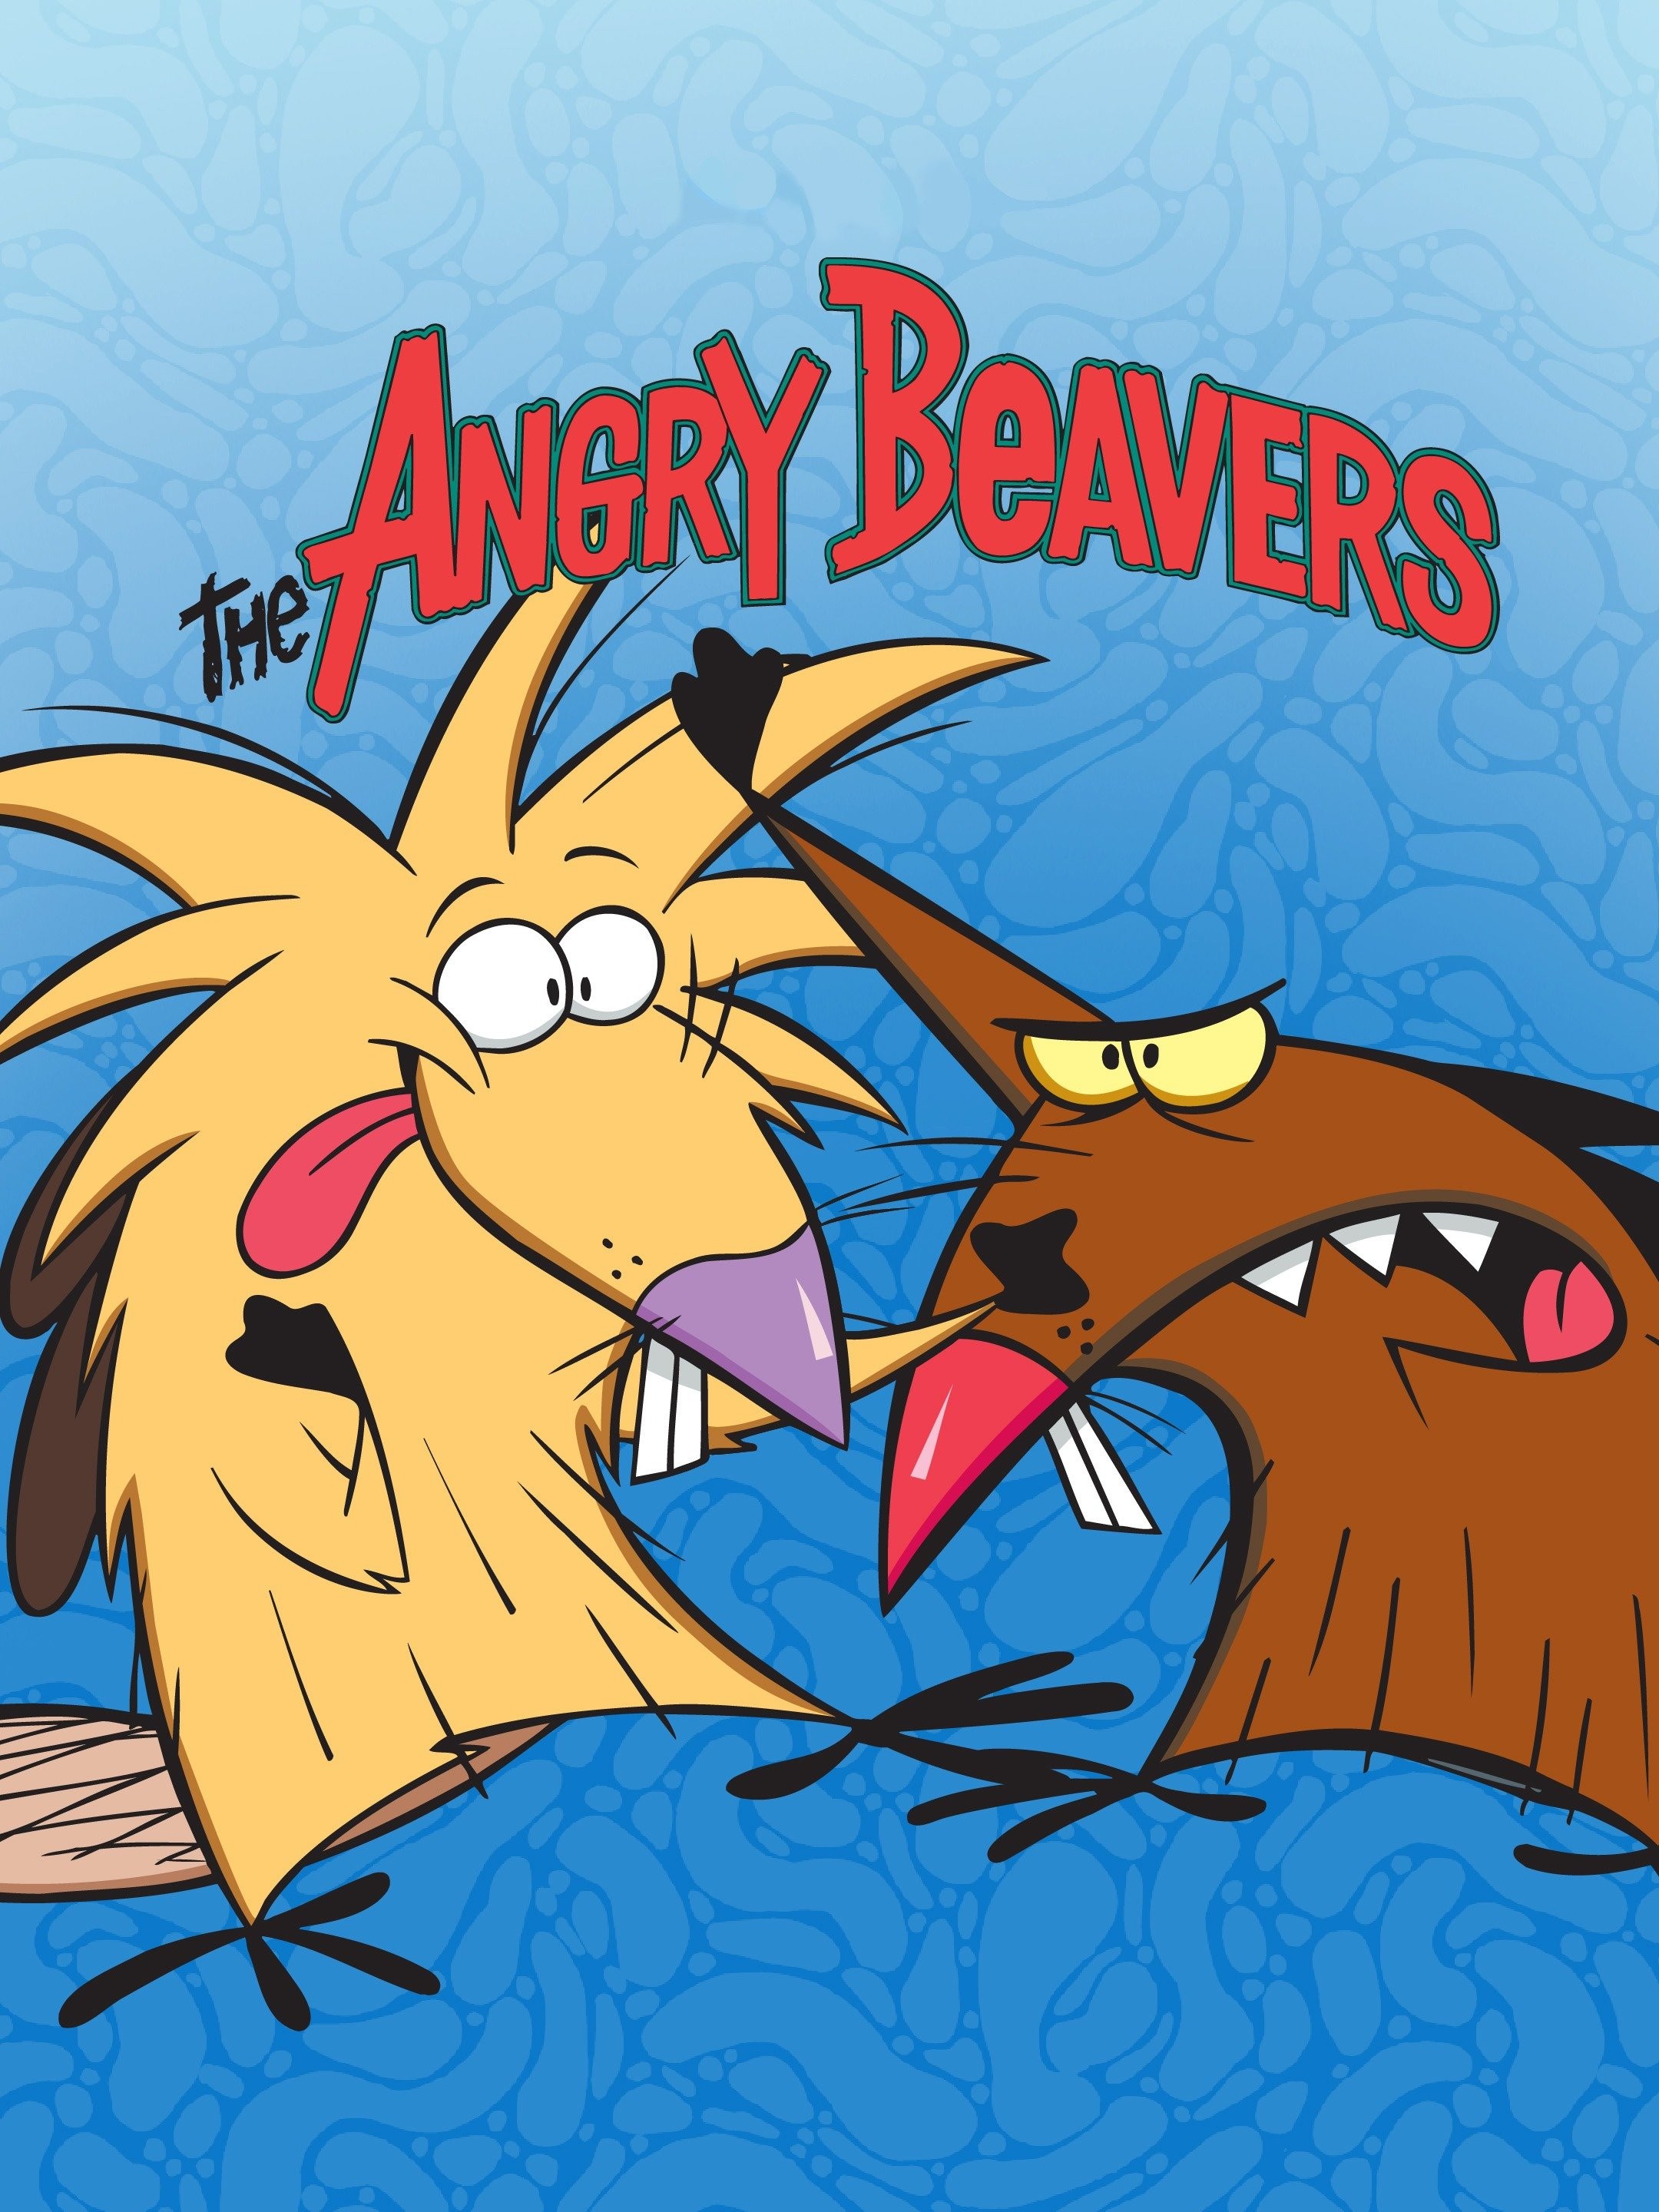 Два бобра последние. Норберт бобер. Angry beavers. Крутые бобры 1997.